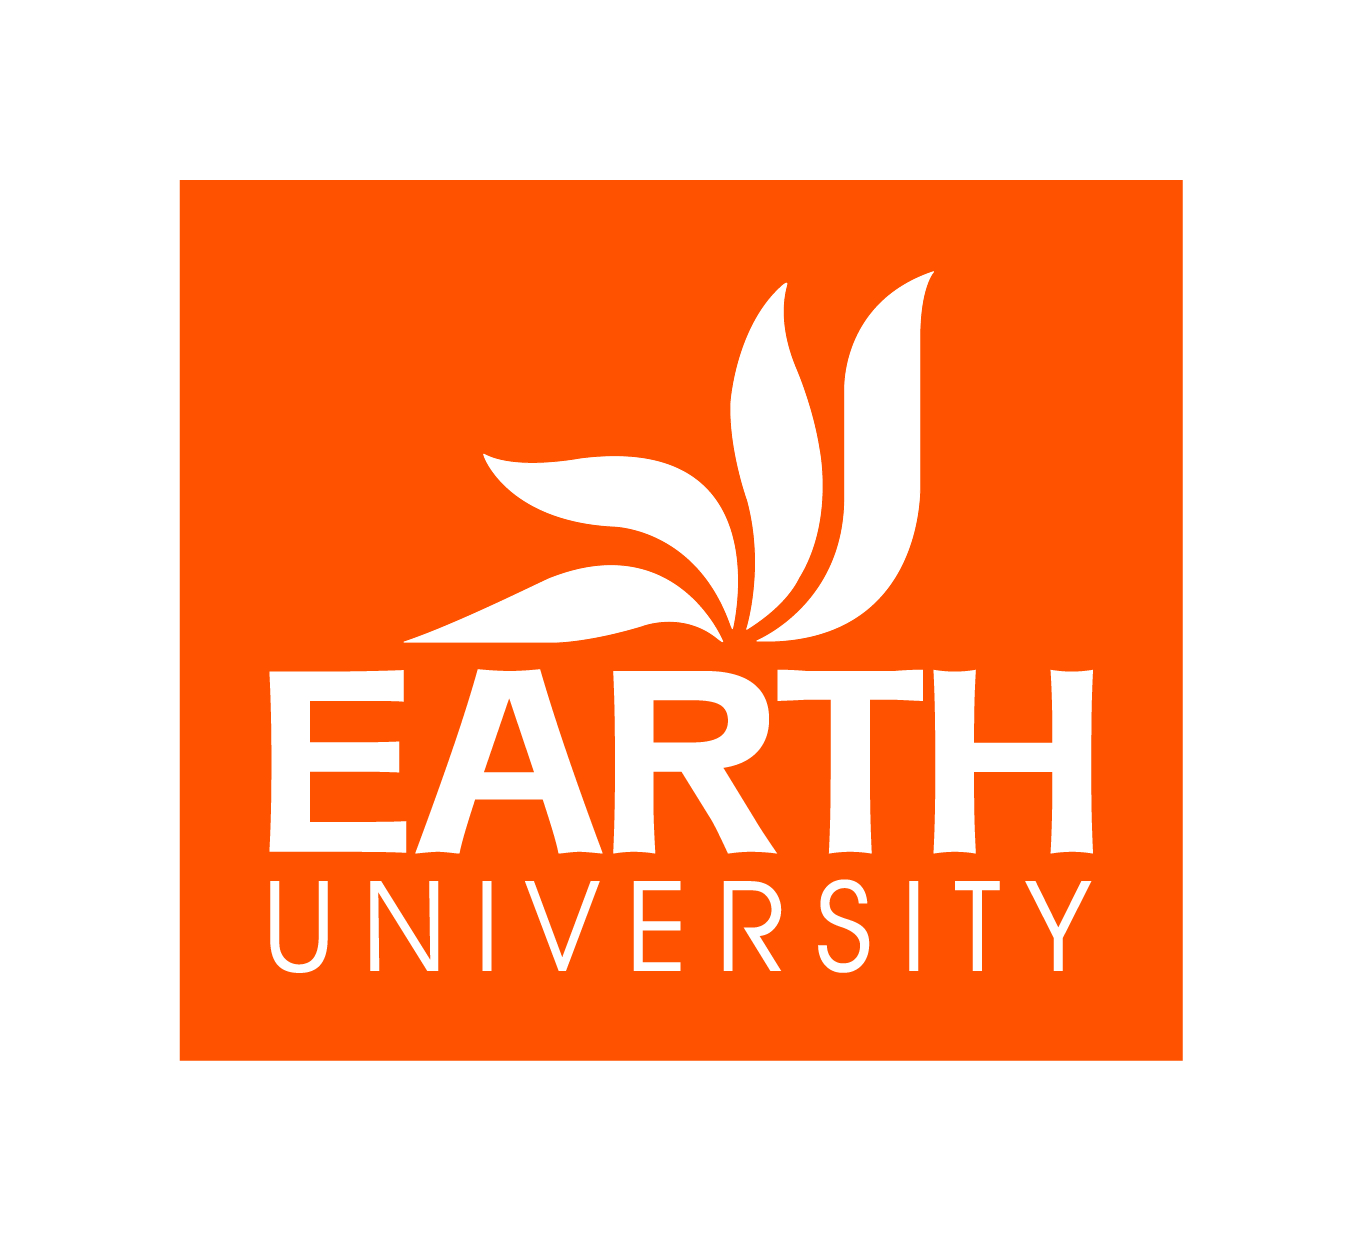 OLD DO NOT USE EARTH University logo